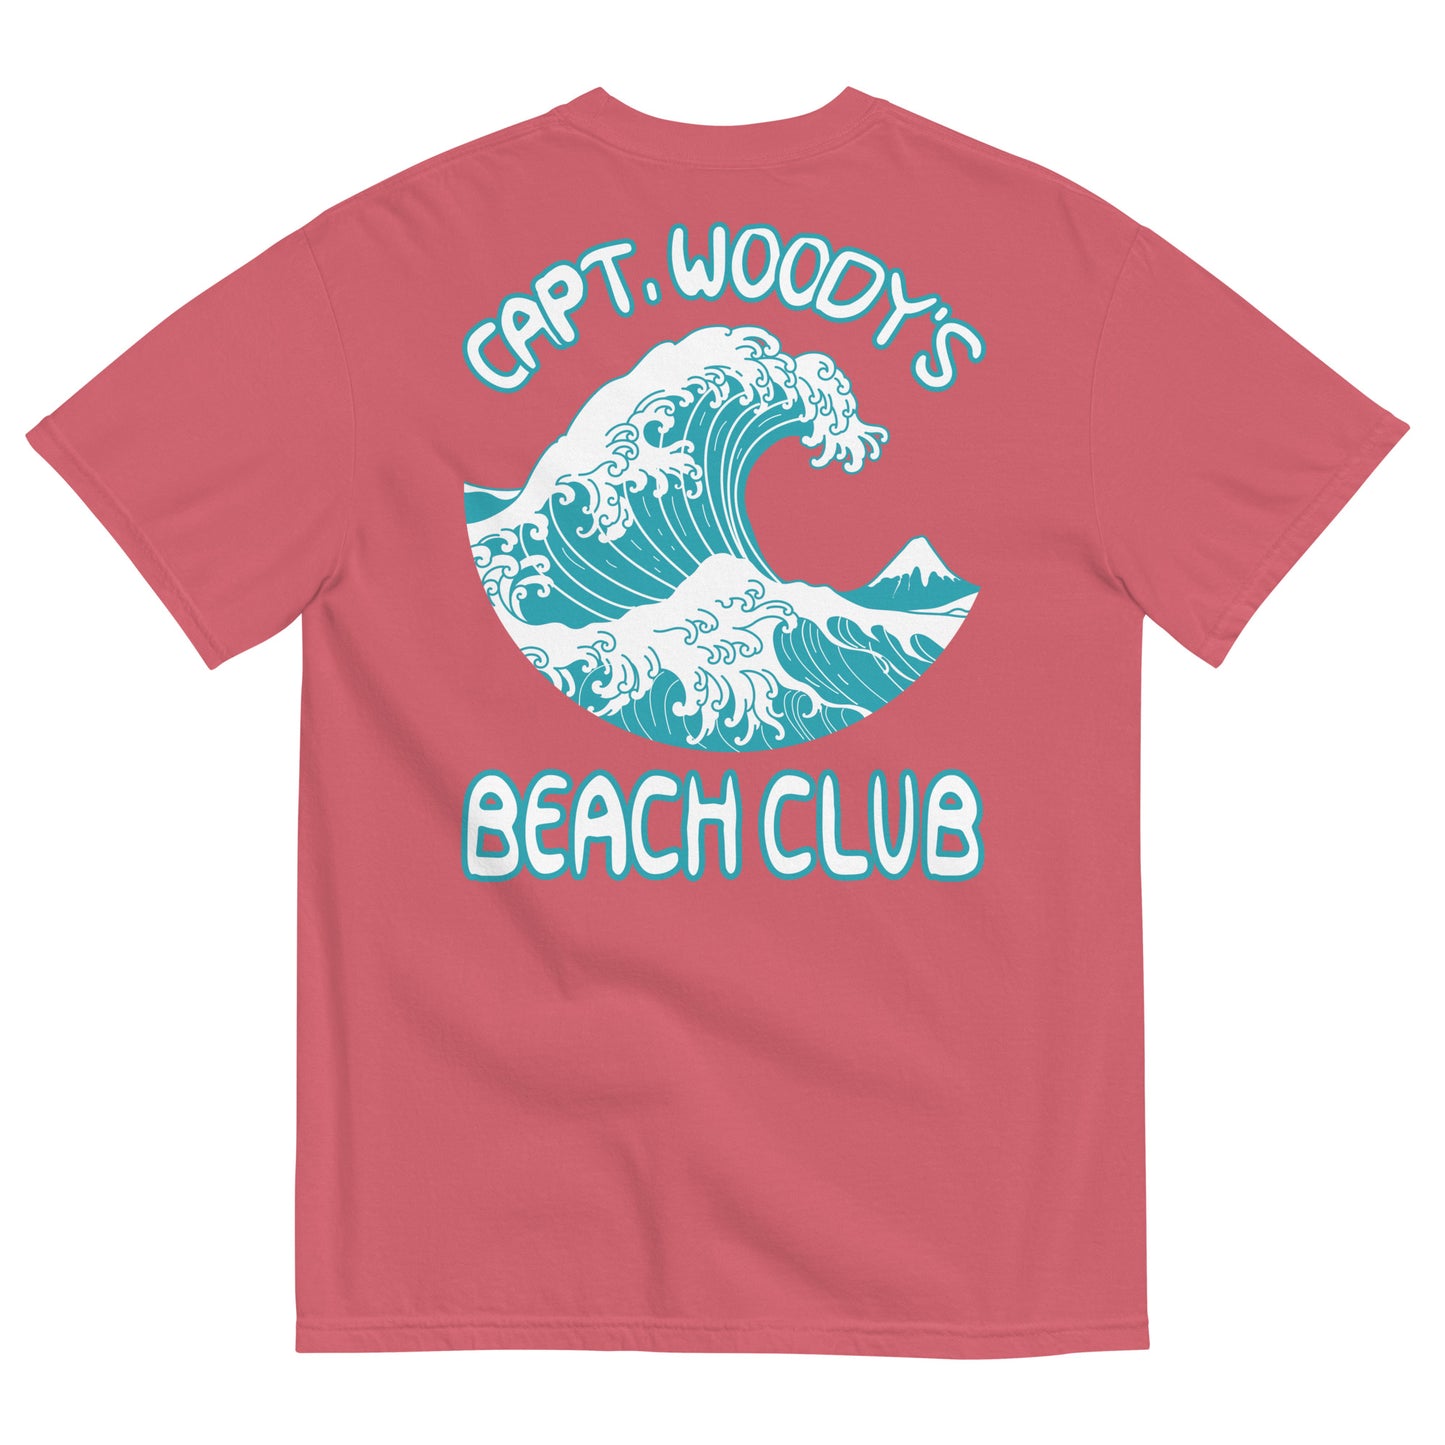 Capt. Woody's Bech Club Big Surf Wave Comfort Colors  T-Shirt